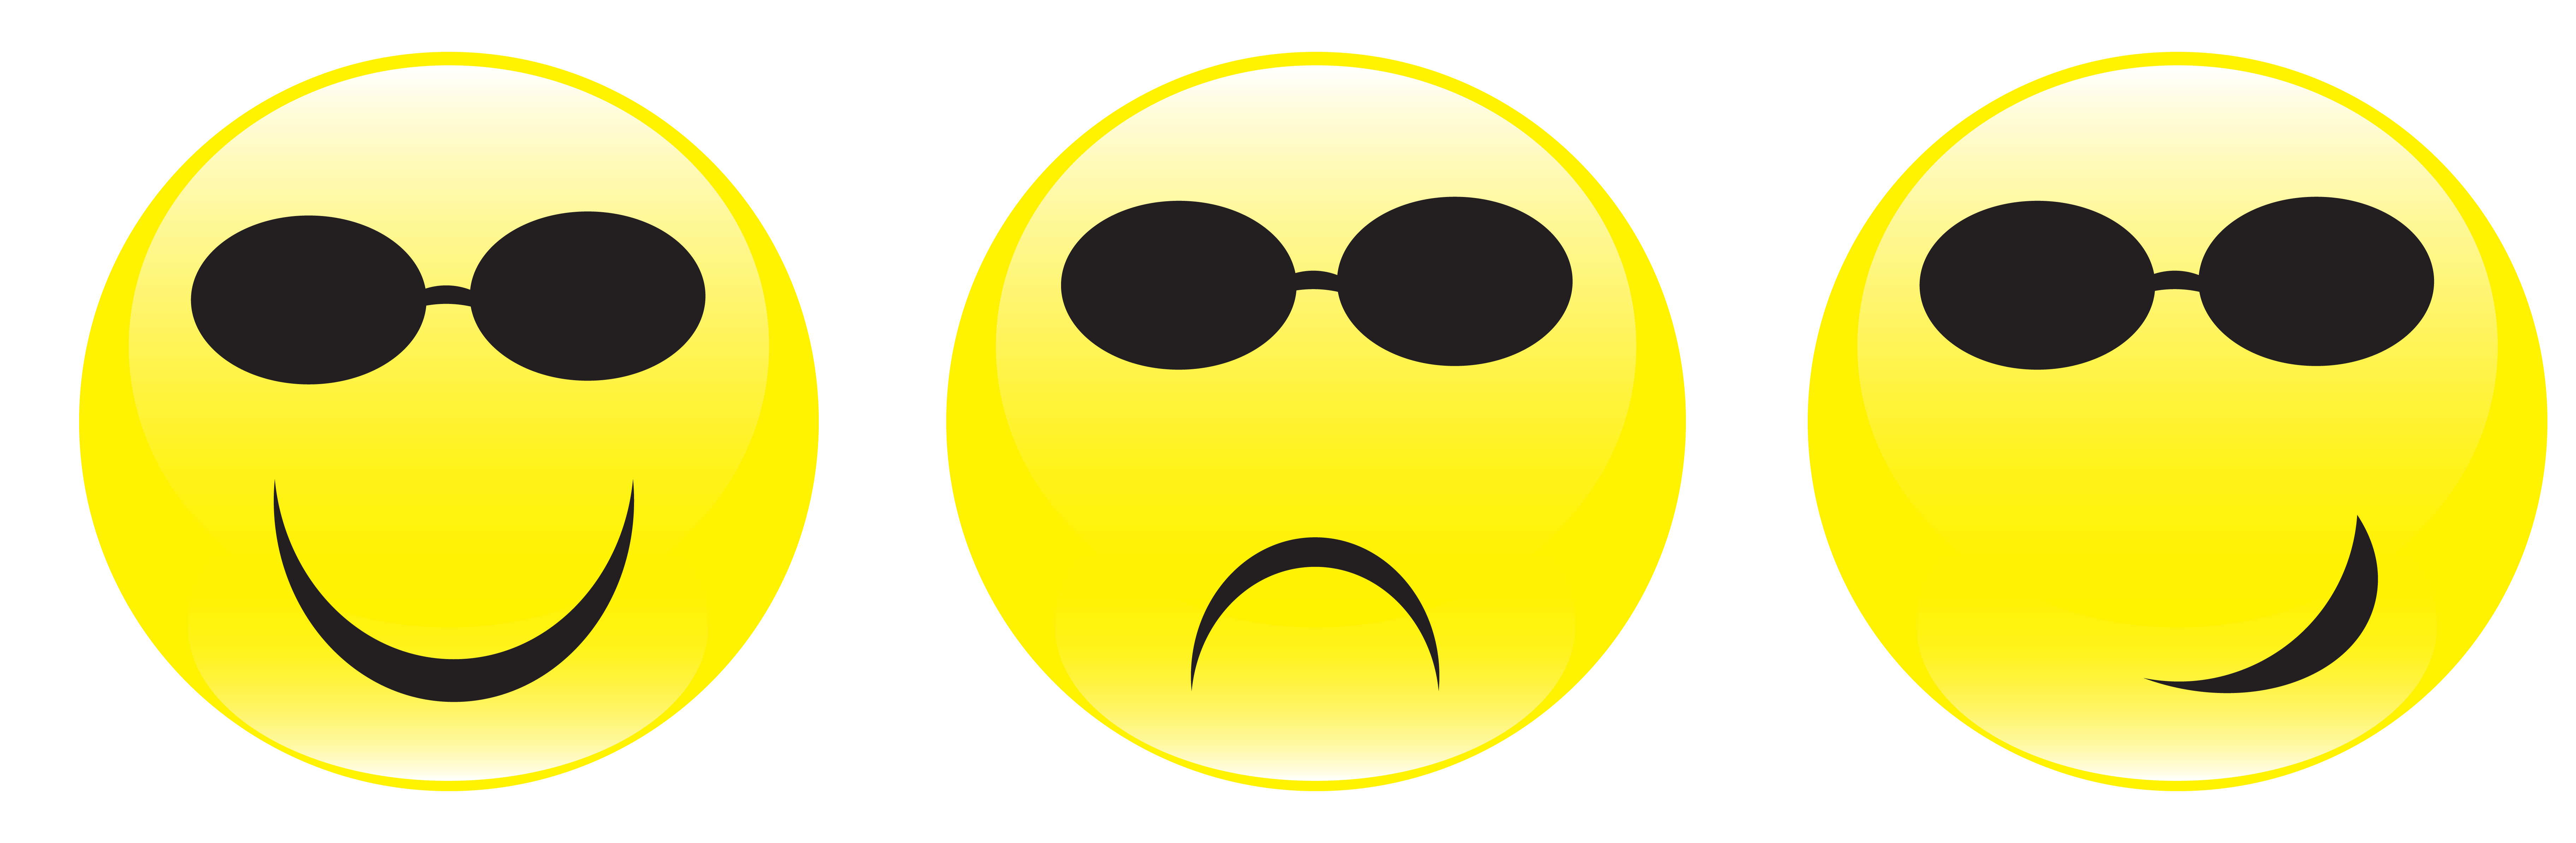 Happy Sad Face | Free Download Clip Art | Free Clip Art | on ...